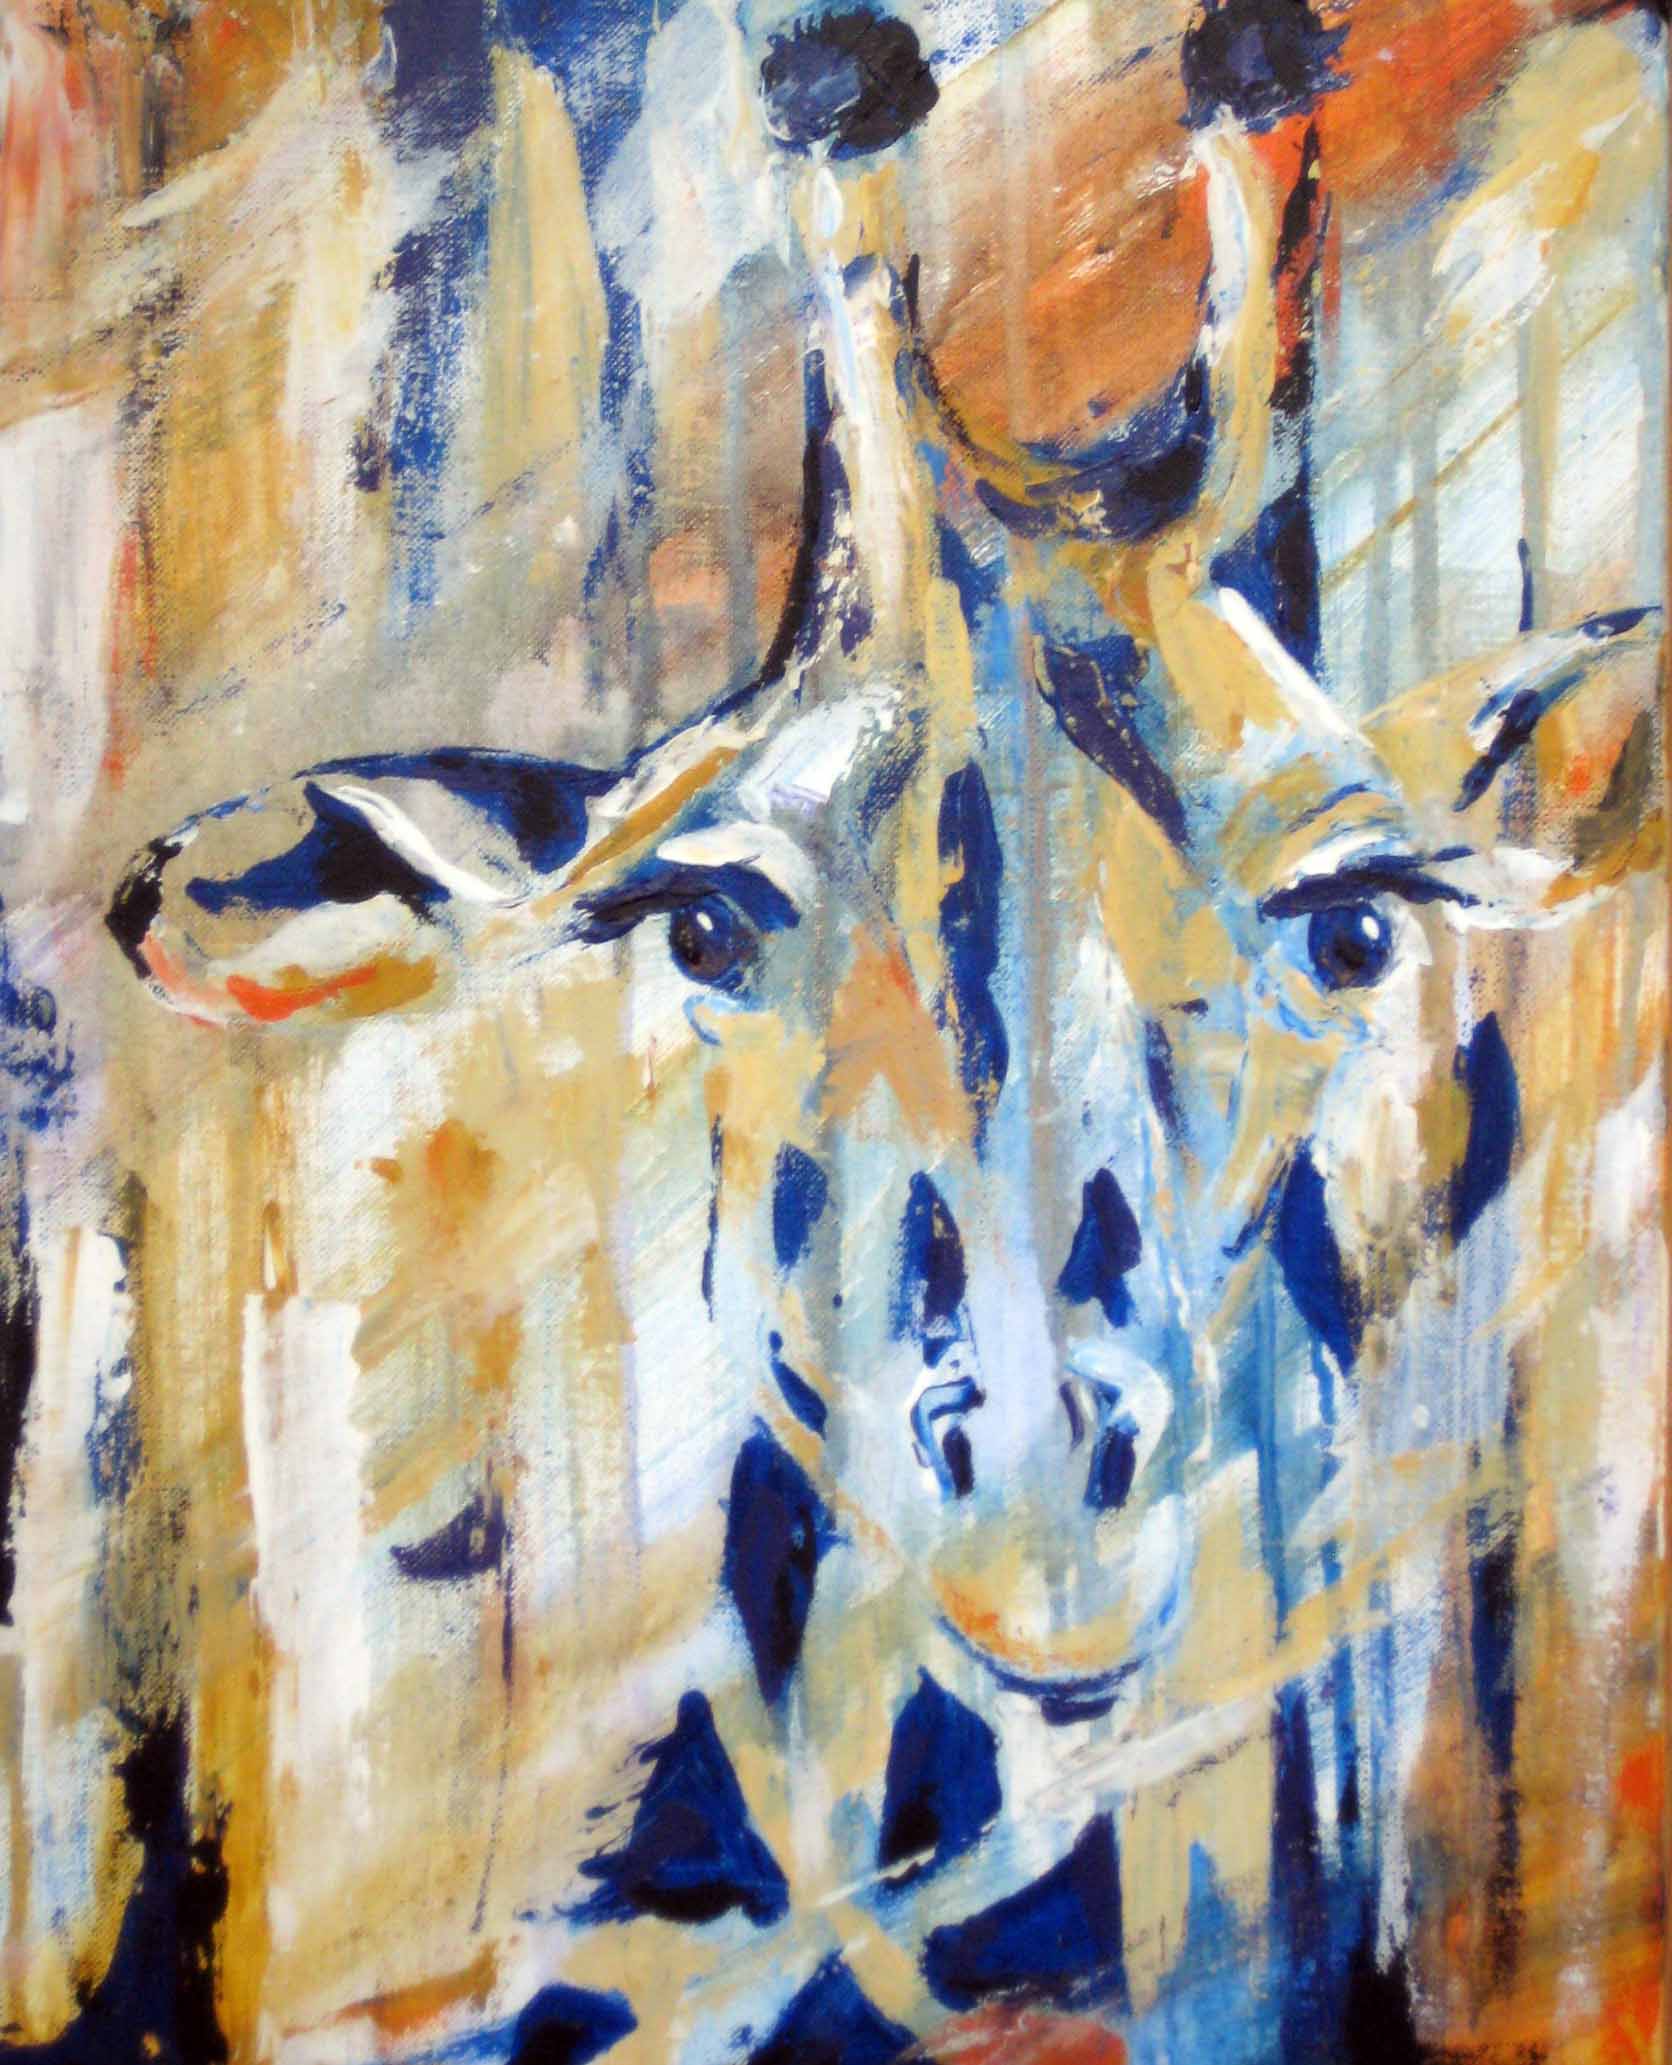 Spots, Giraffe, South Africa, Acrylic on canvas, 30 x 40 cm.jpg